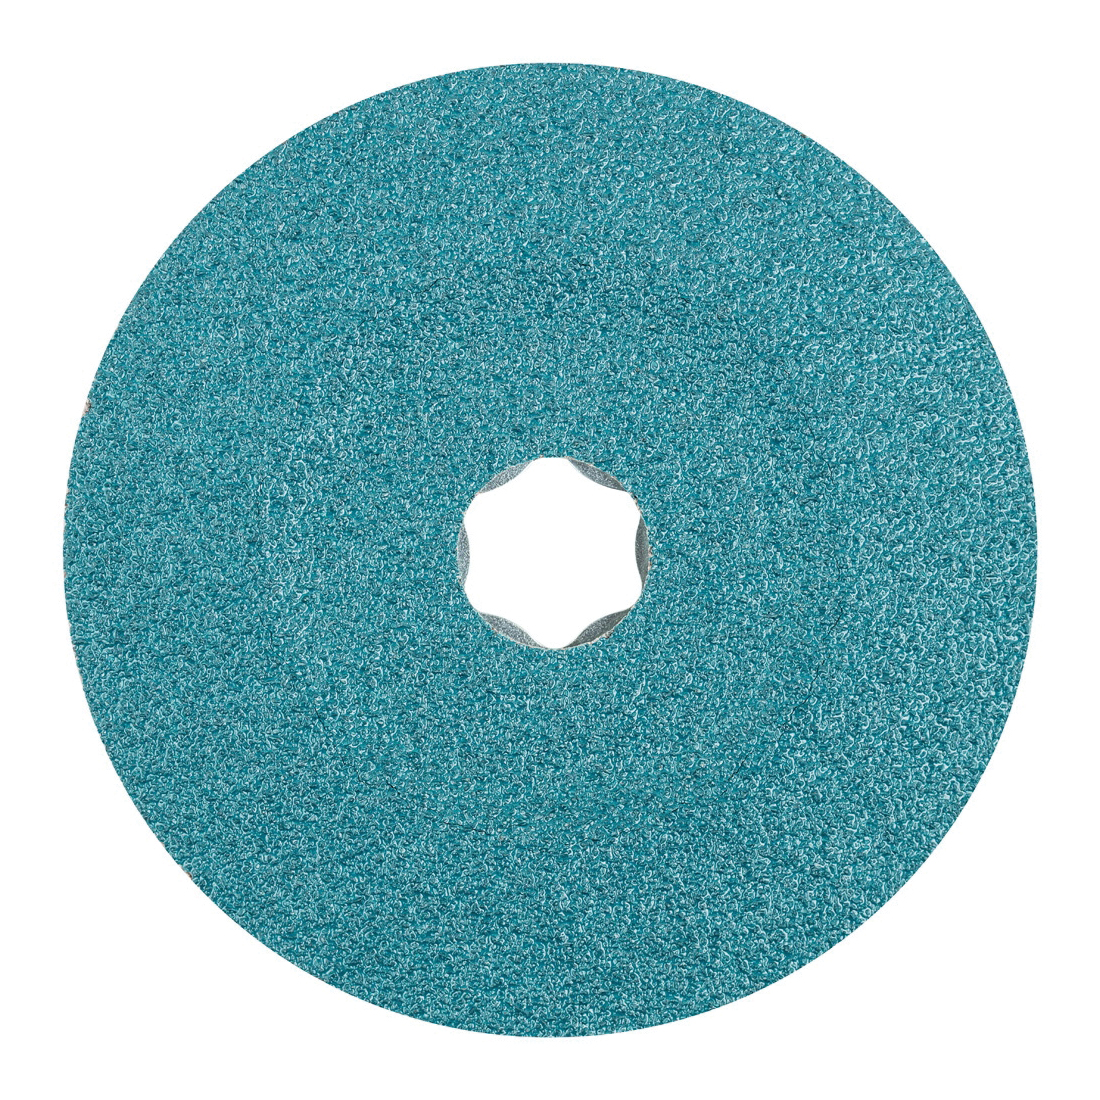 PFERD COMBICLICK® 40131 Coated Abrasive Disc, 4-1/2 in Dia, 36 Grit, Zirconia Alumina Abrasive